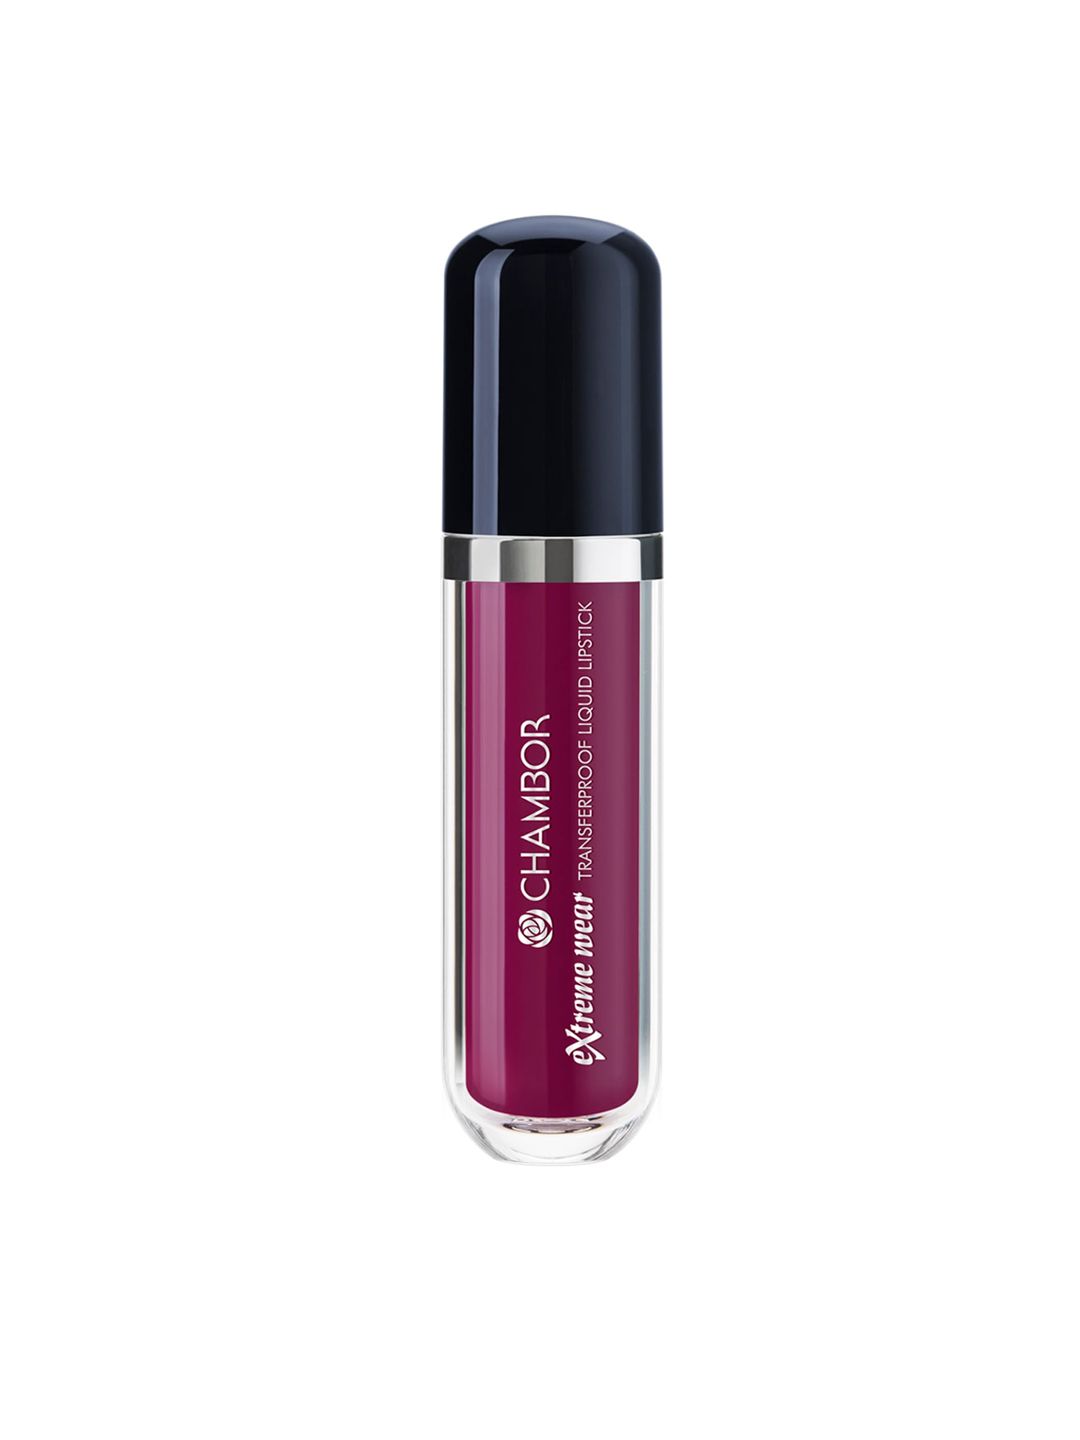 CHAMBOR Extreme Wear Transferproof Liquid Lipstick PRIMROSE PINK #410 6 ml Price in India